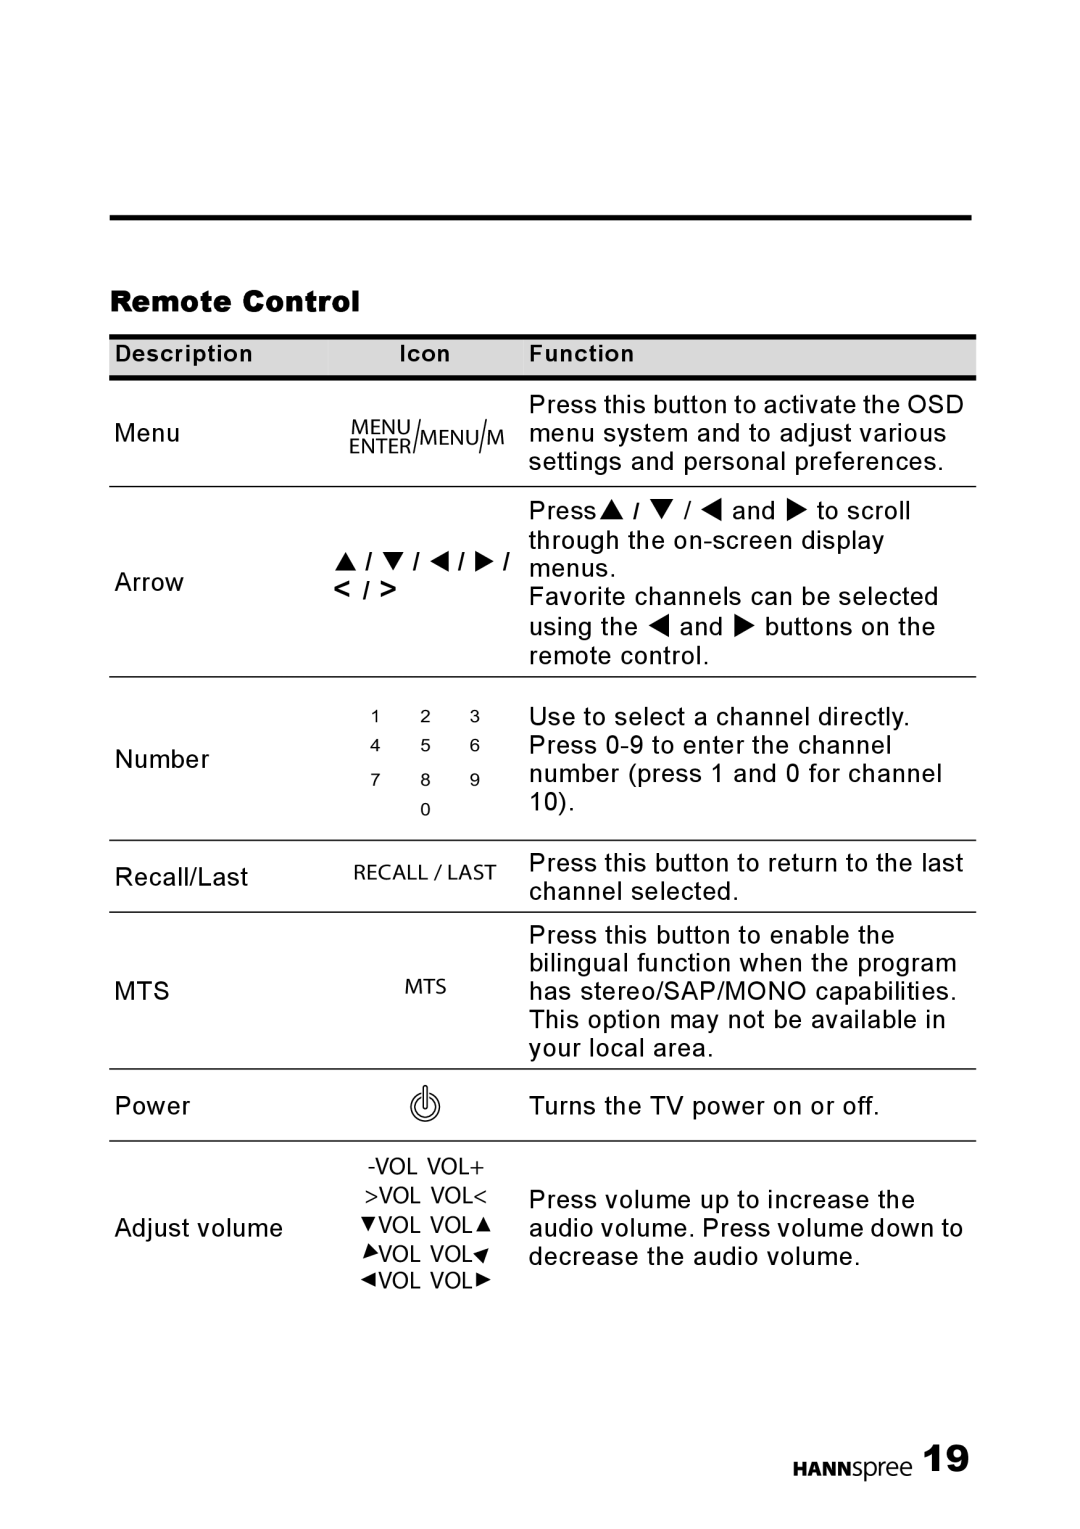 HANNspree HANNSz.crab user manual Remote Control, Vol Vol+ 